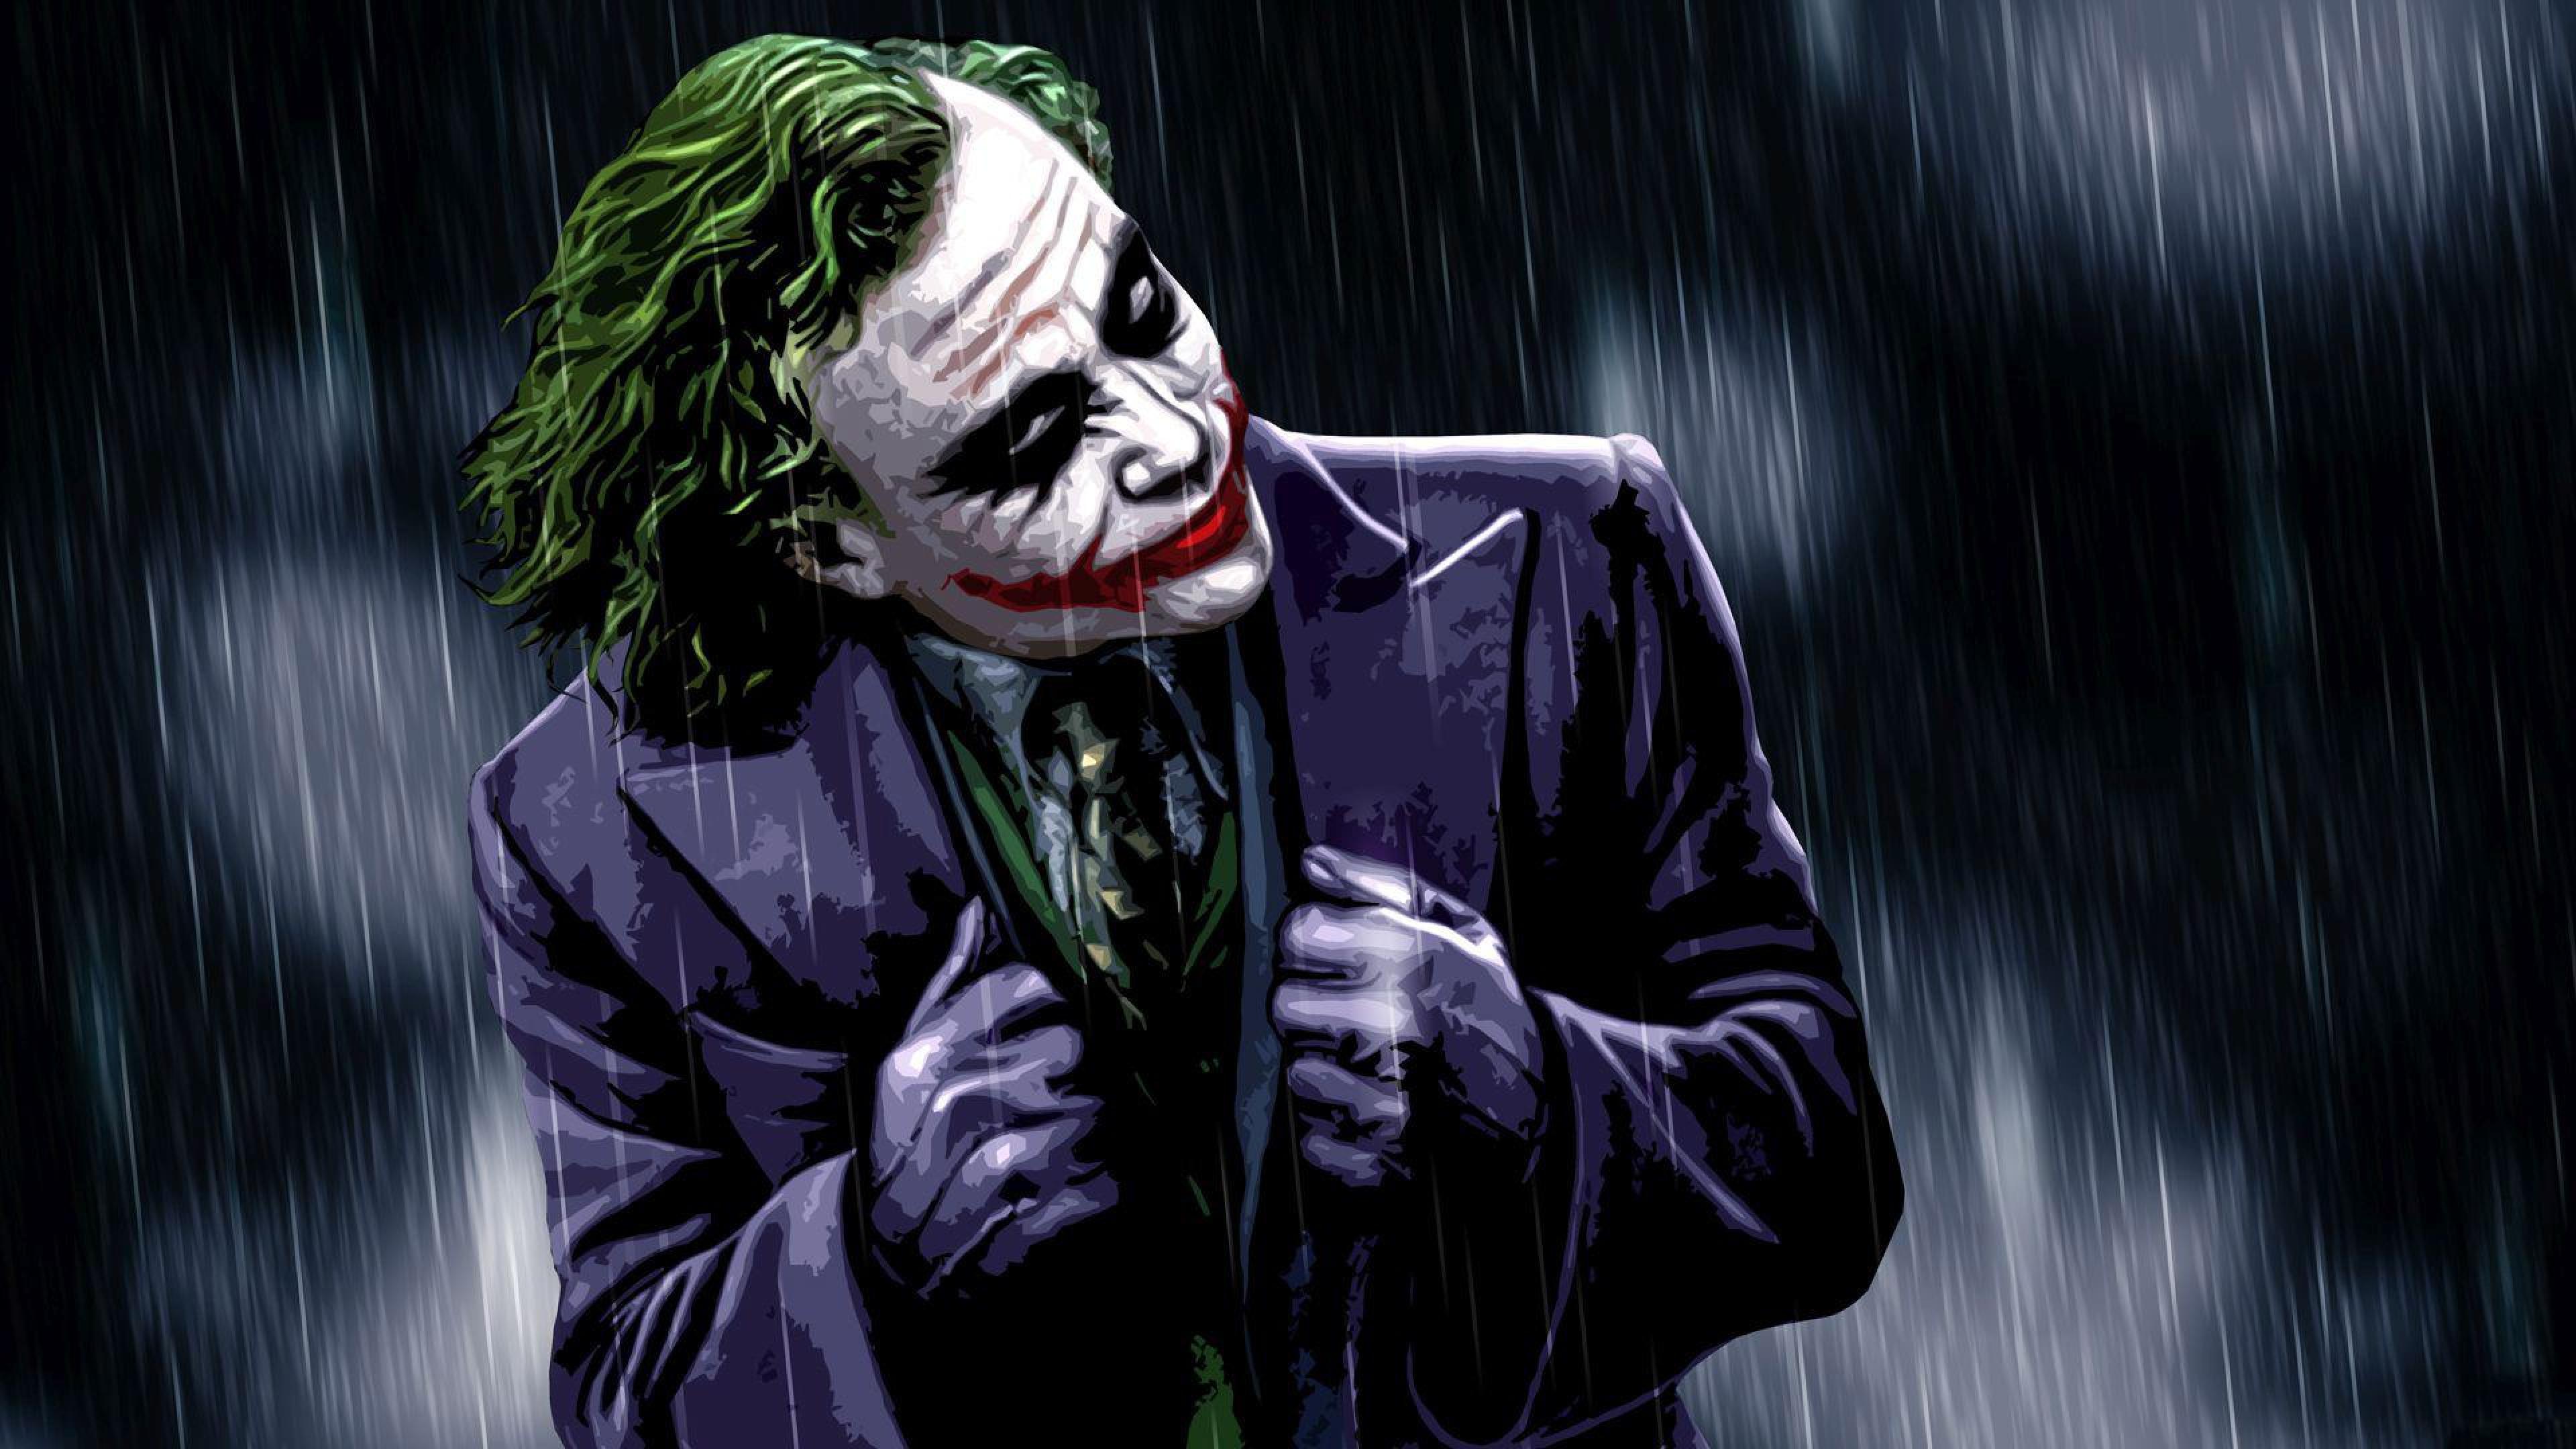 The Joker The Dark Knight Desktop Wallpaper Hd For Mobile Phones And Laptops 3840x2160 